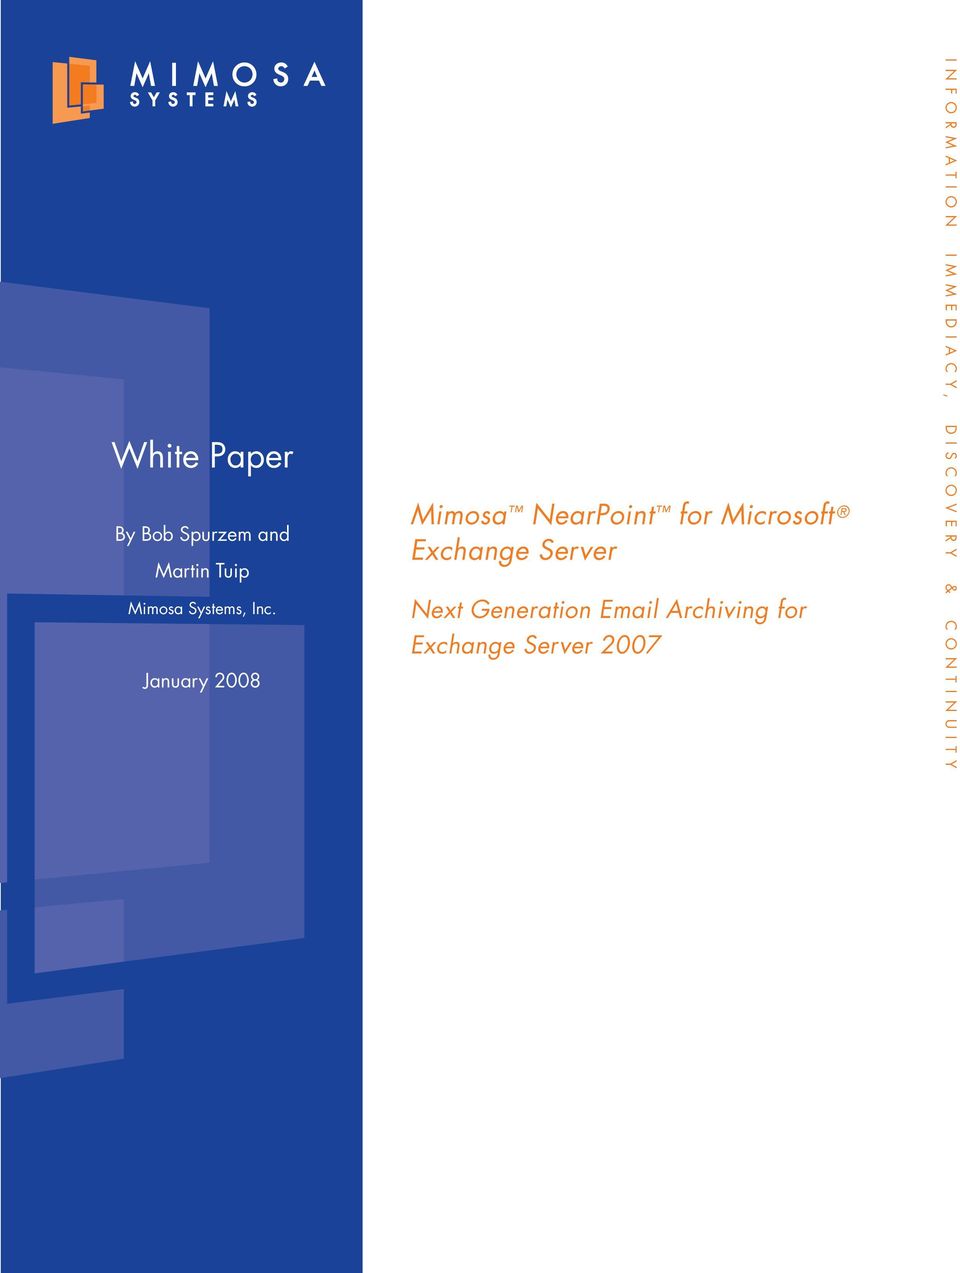 January 2008 Mimosa NearPoint for Microsoft